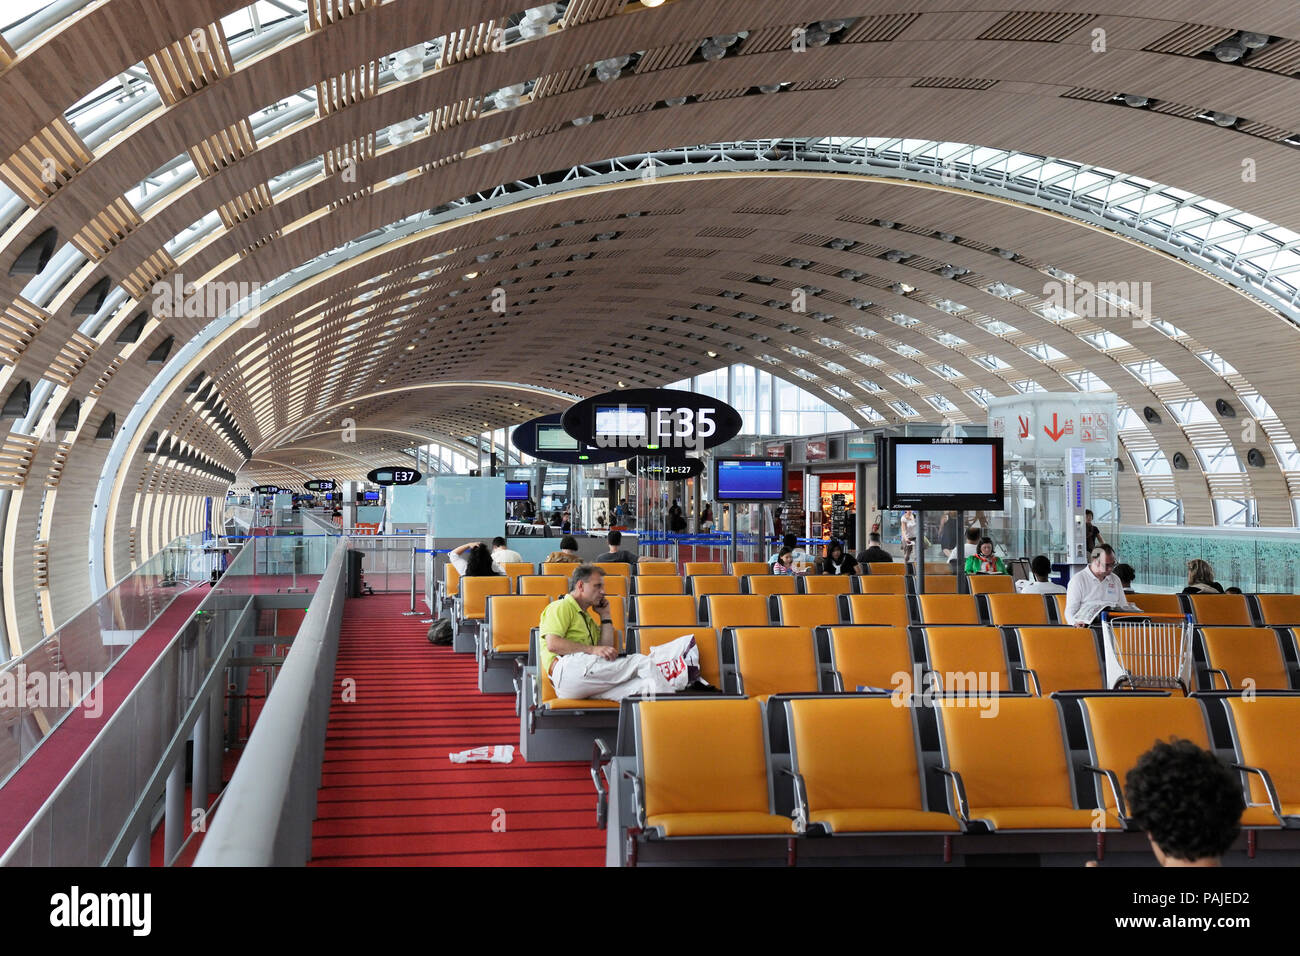 Terminal2E at Paris Charles de Gaulle airport Stock Photo